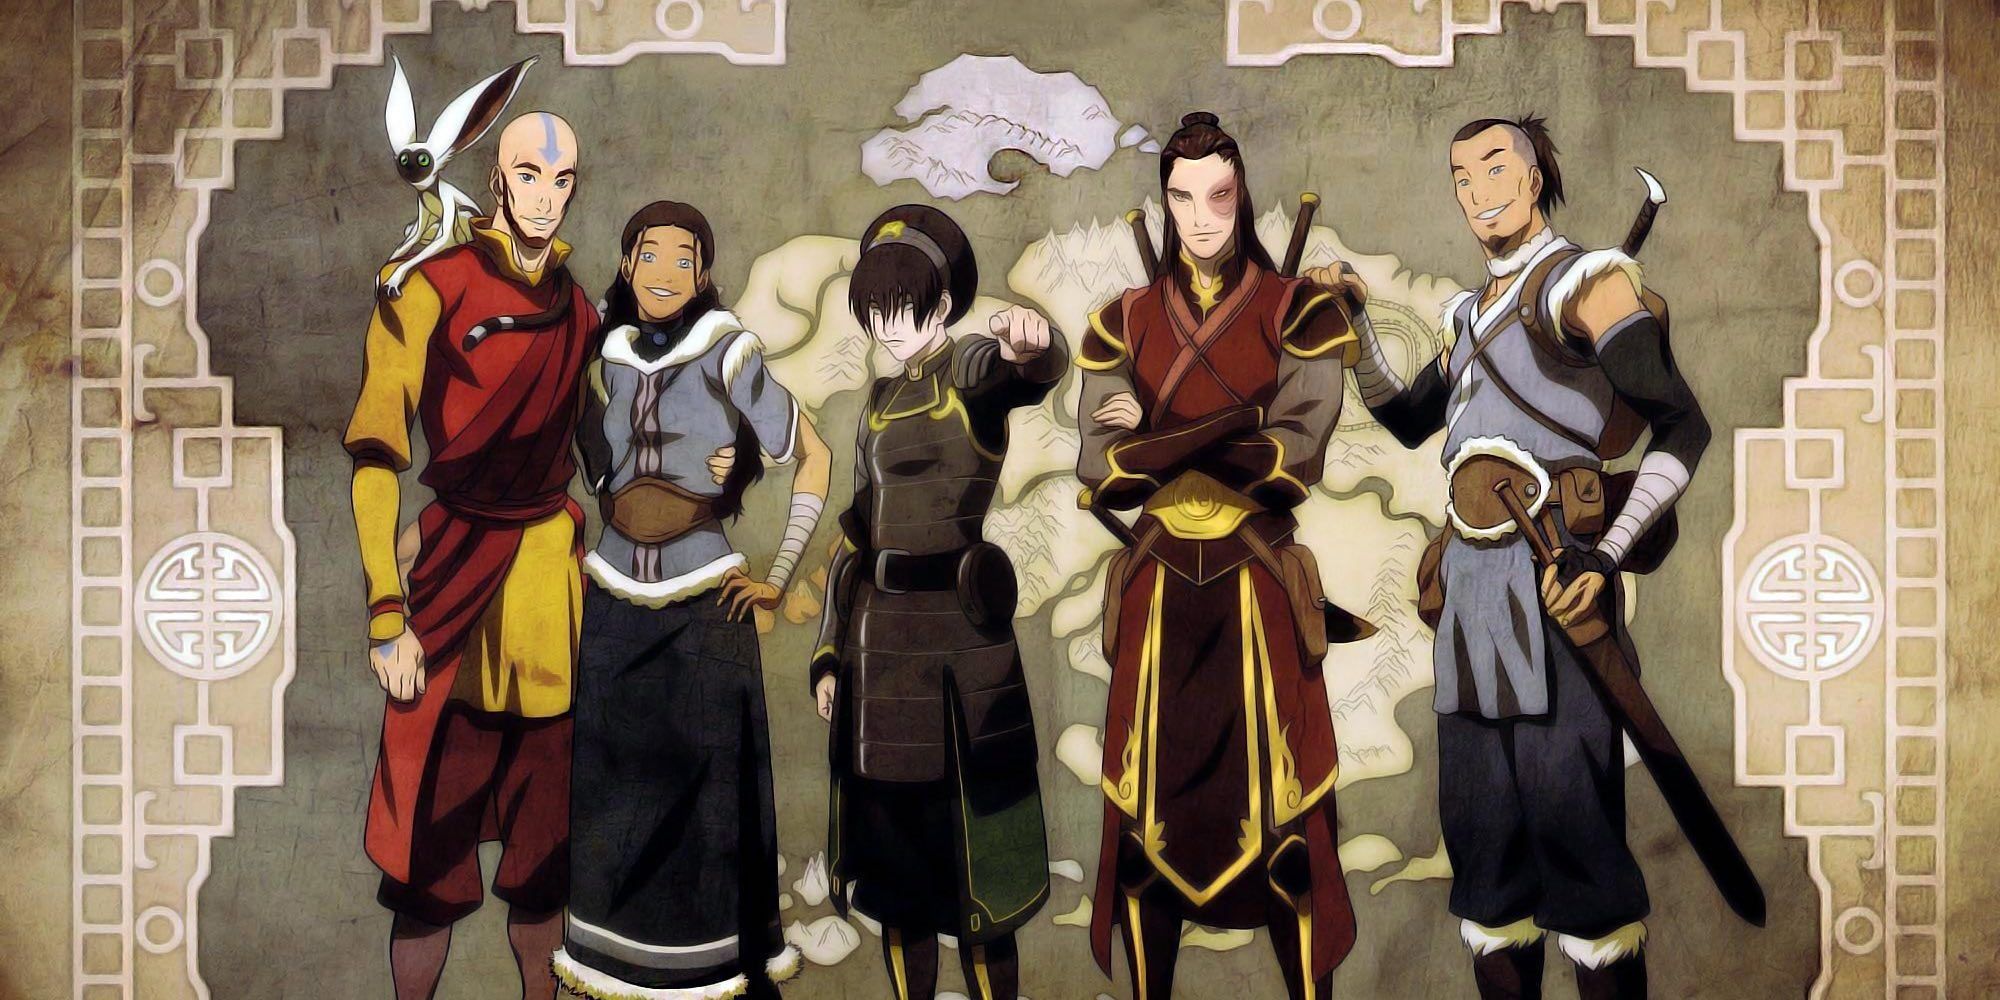 Adult Aang, Katara, Toph, Zuko and Sokka from Avatar the Last Airbender